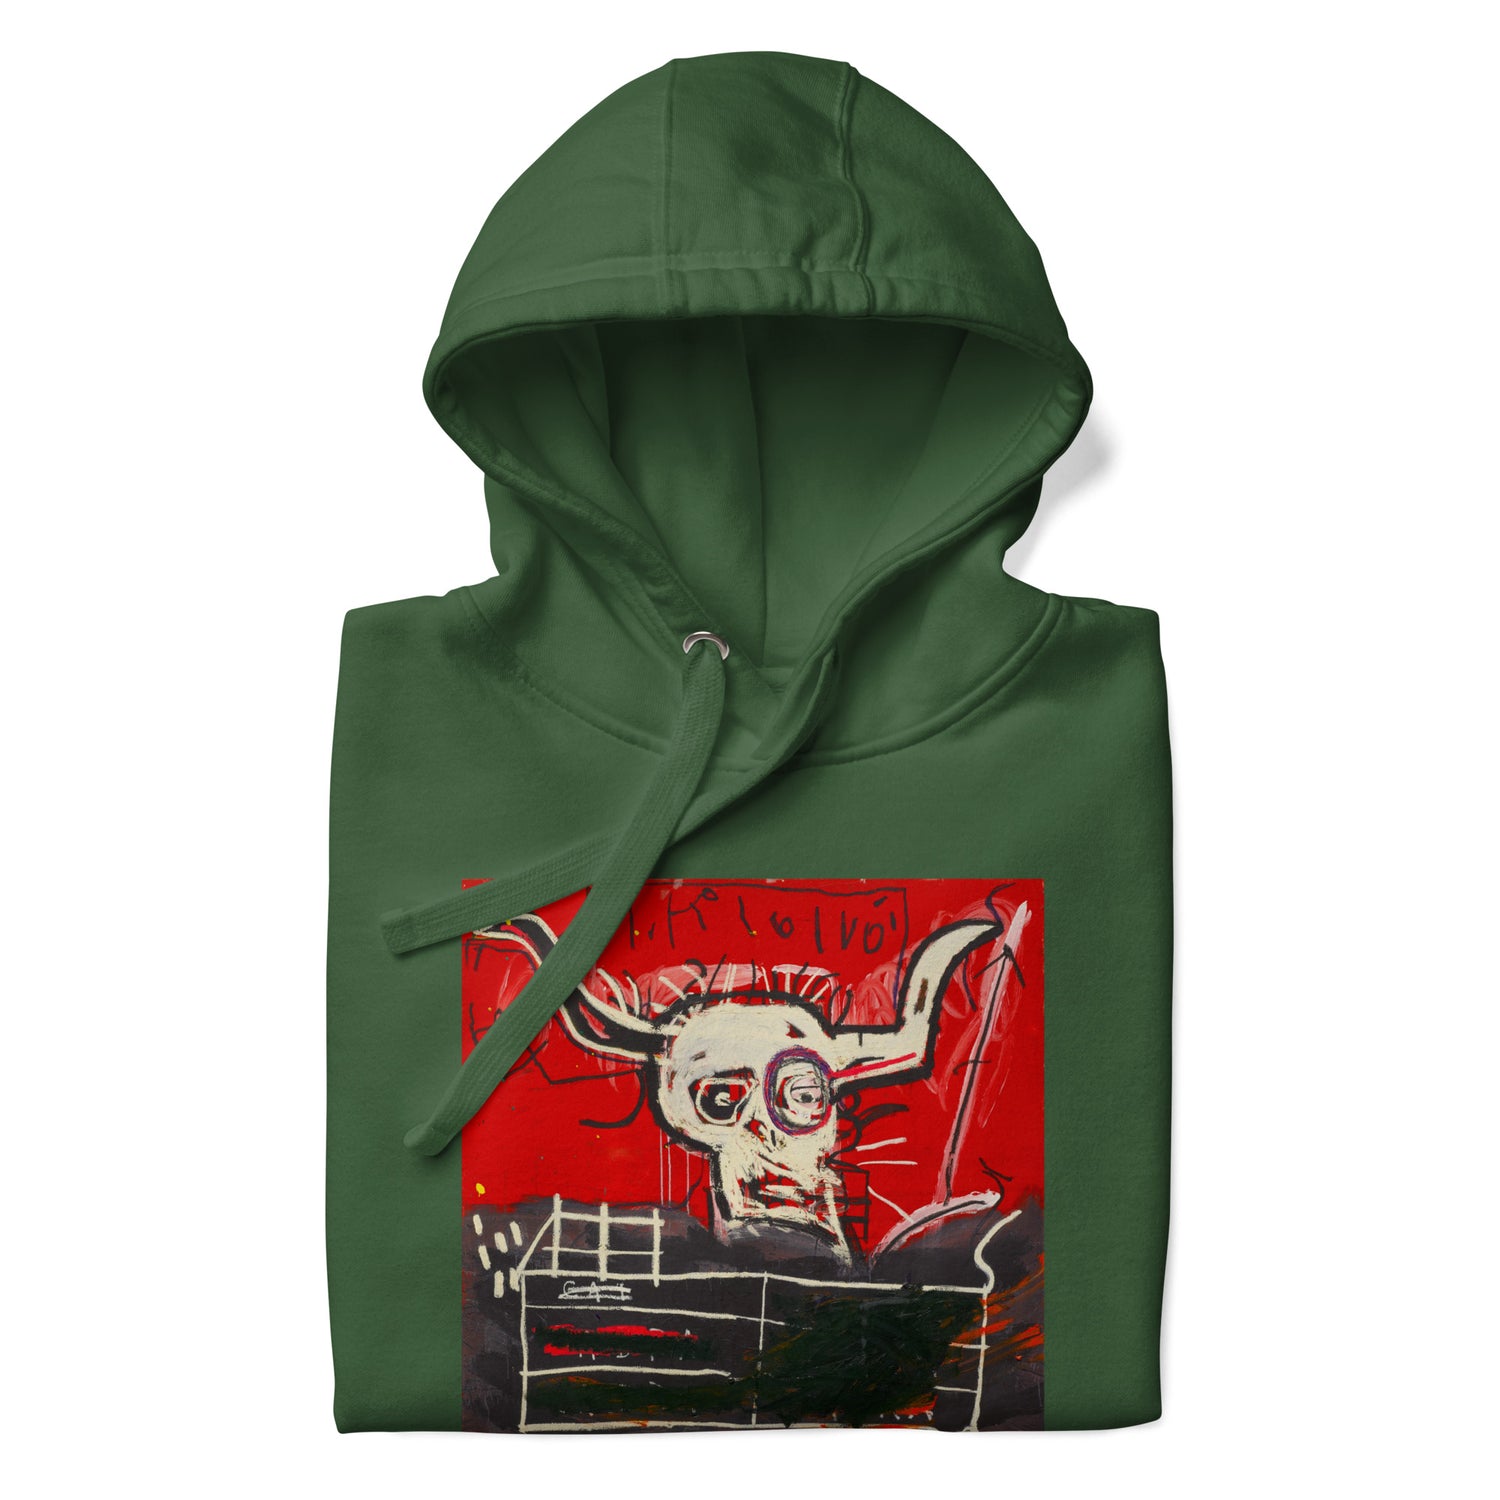 Jean-Michel Basquiat "Cabra" Artwork Printed Premium Streetwear Sweatshirt Hoodie Forest Green